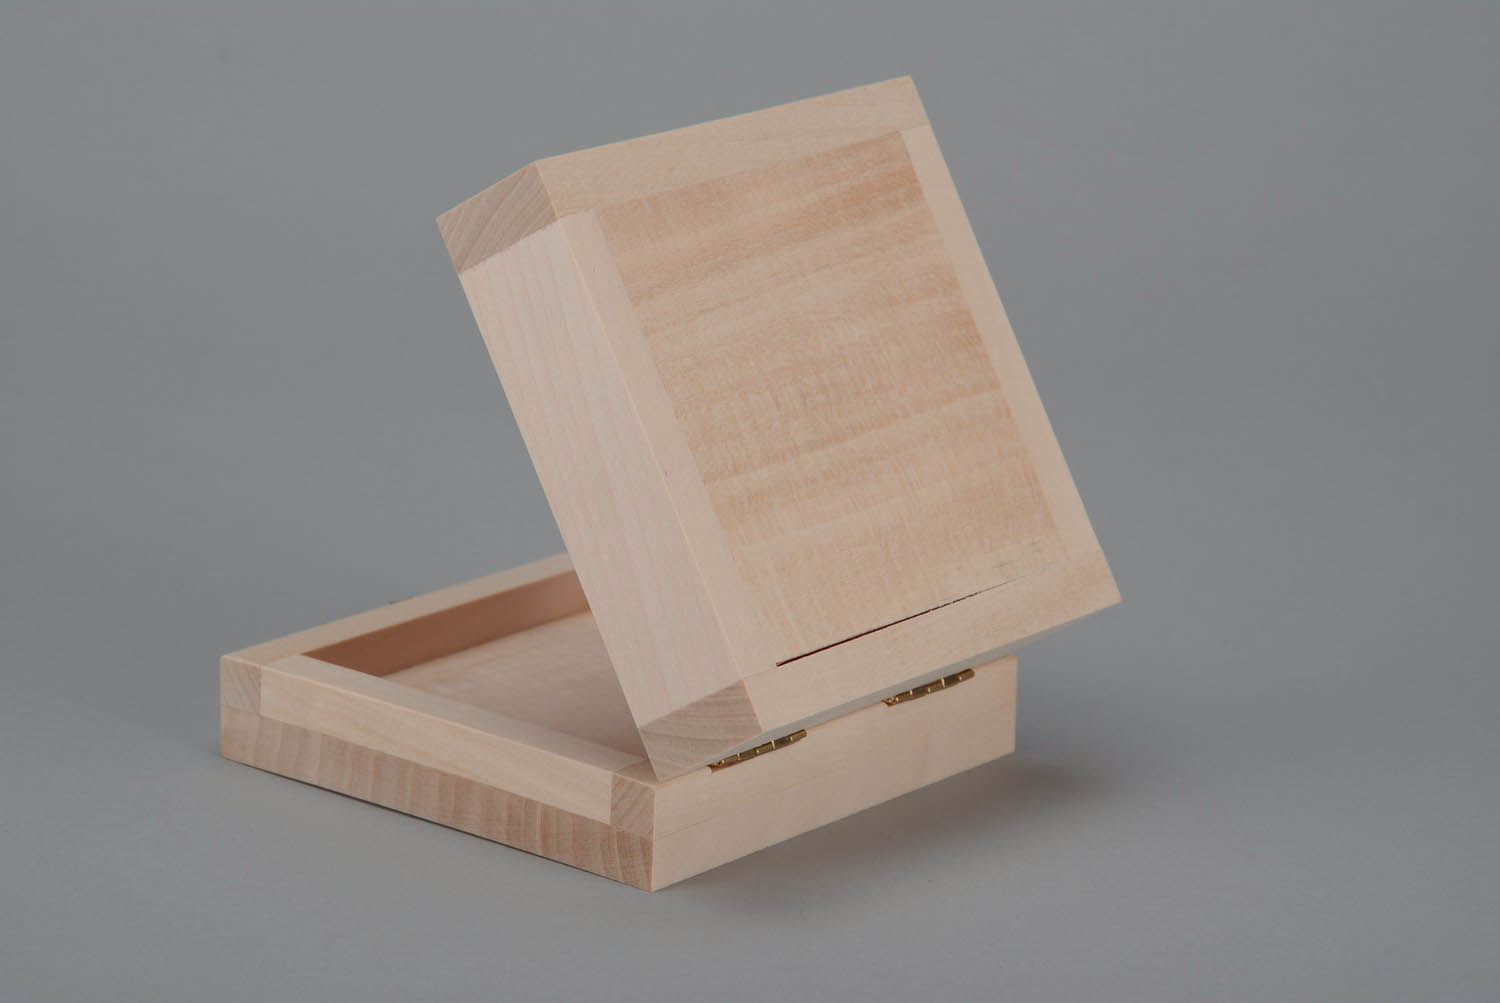 Caja de madera con acabado de terciopelo por dentro foto 5